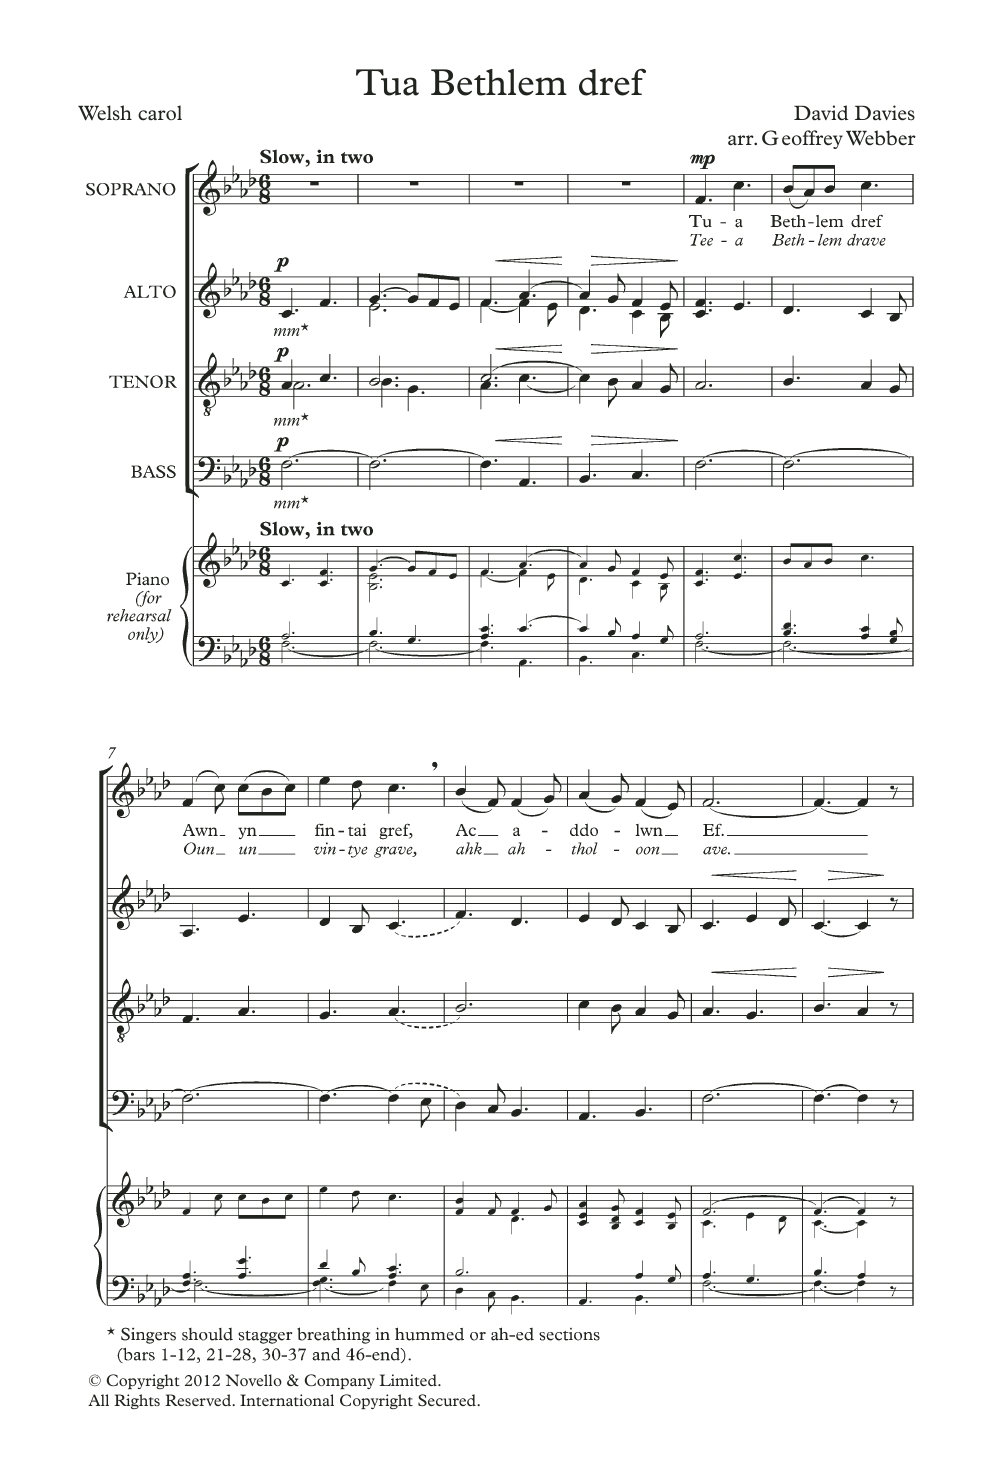 David Davies Tua Bethlem Dref (arr. Geoffrey Webber) sheet music notes and chords arranged for SATB Choir